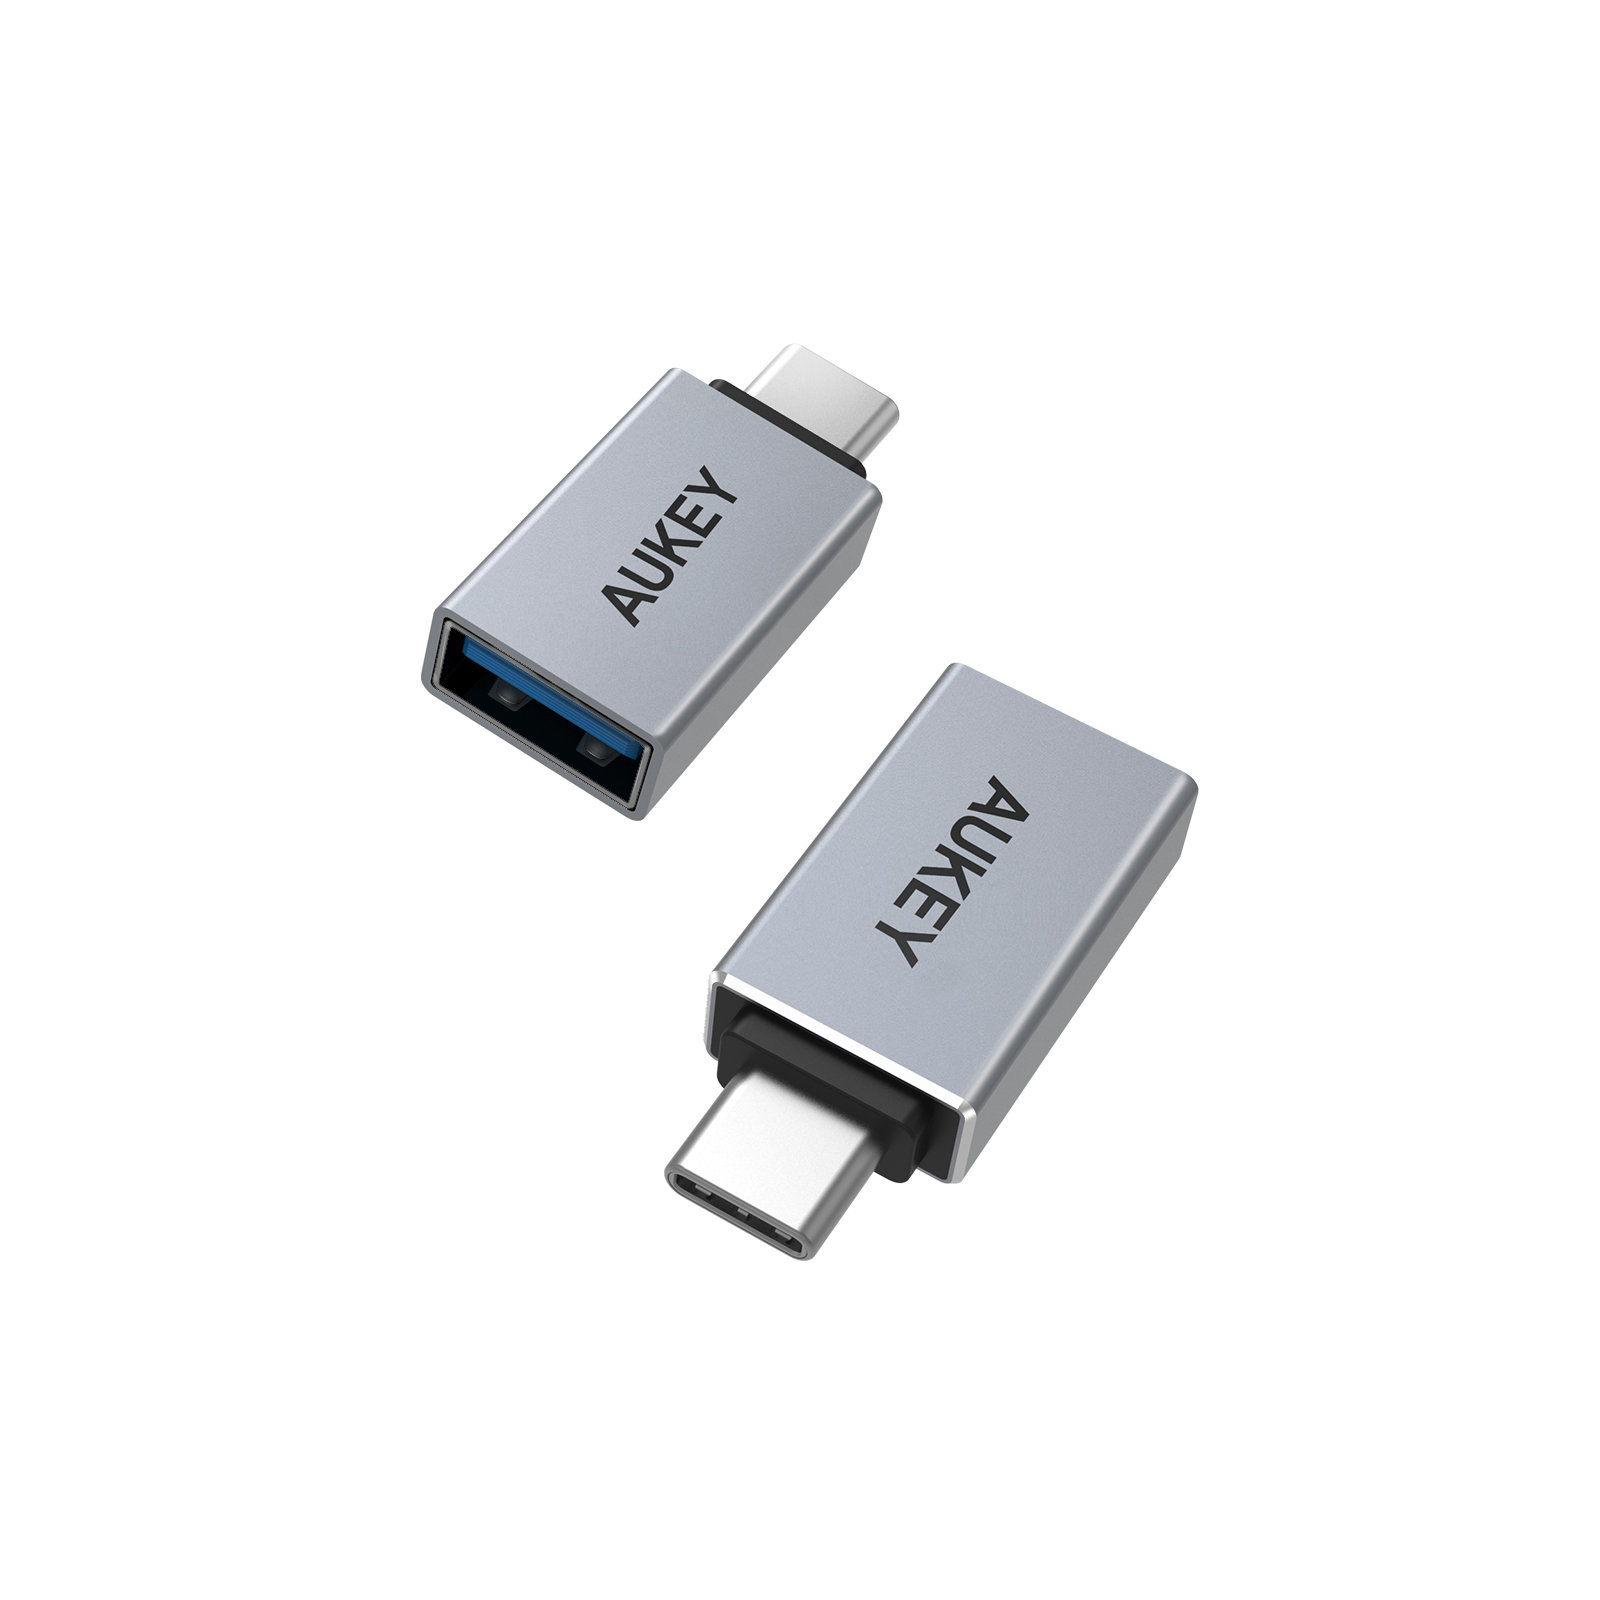 USB Type C to ライトニング 変換アダプタタイプC ライトニング